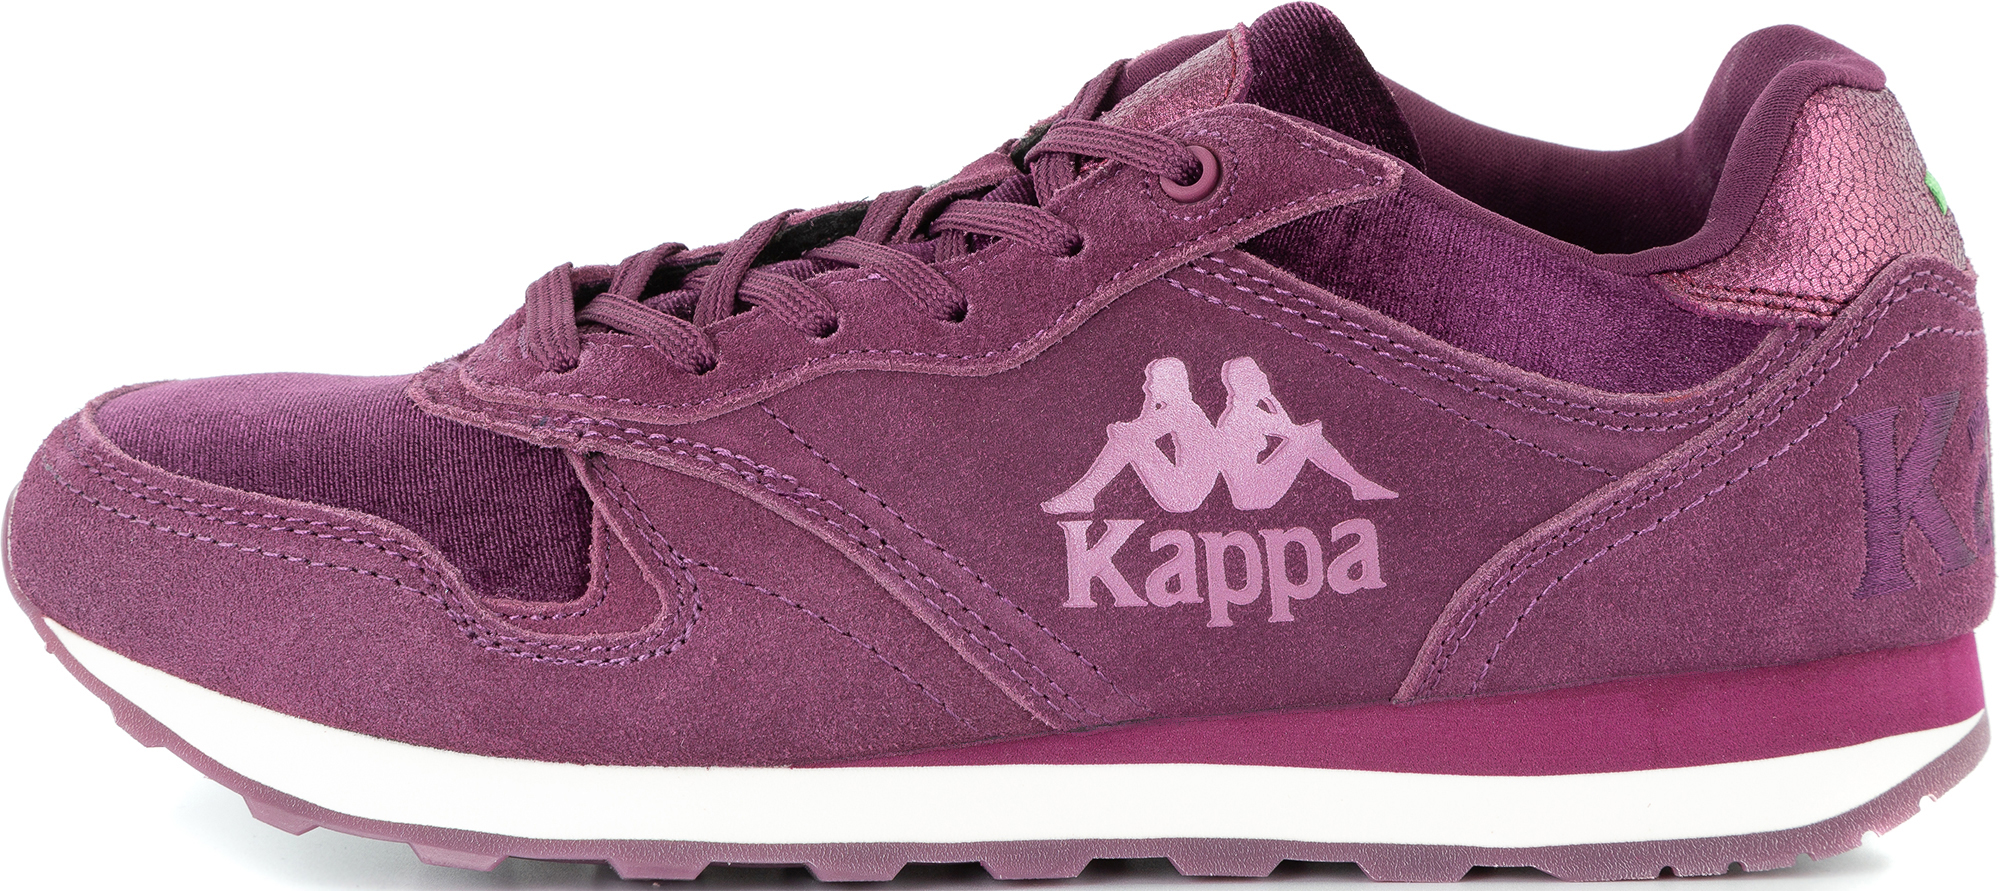 Kappa Кроссовки женские Kappa Authentic Run, размер 41